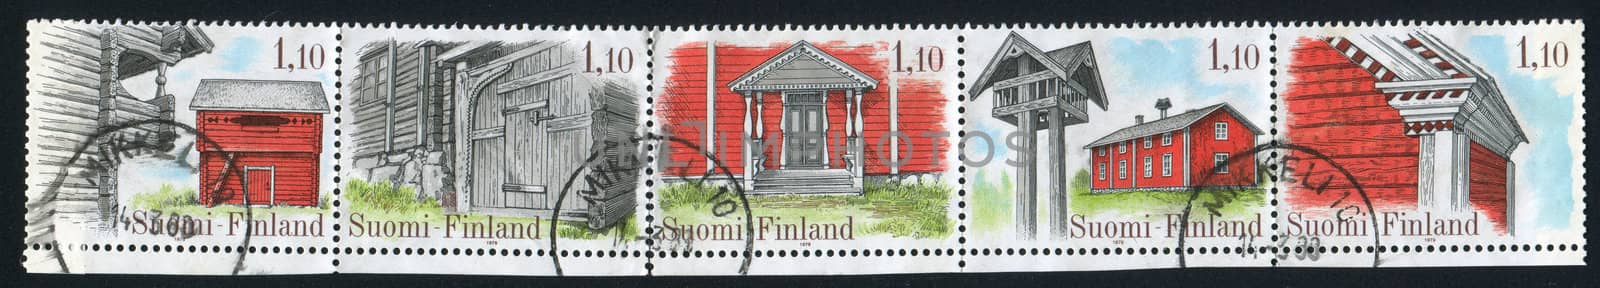 FINLAND - CIRCA 1979: stamp printed by Finland, shows Farm Houses, circa 1979